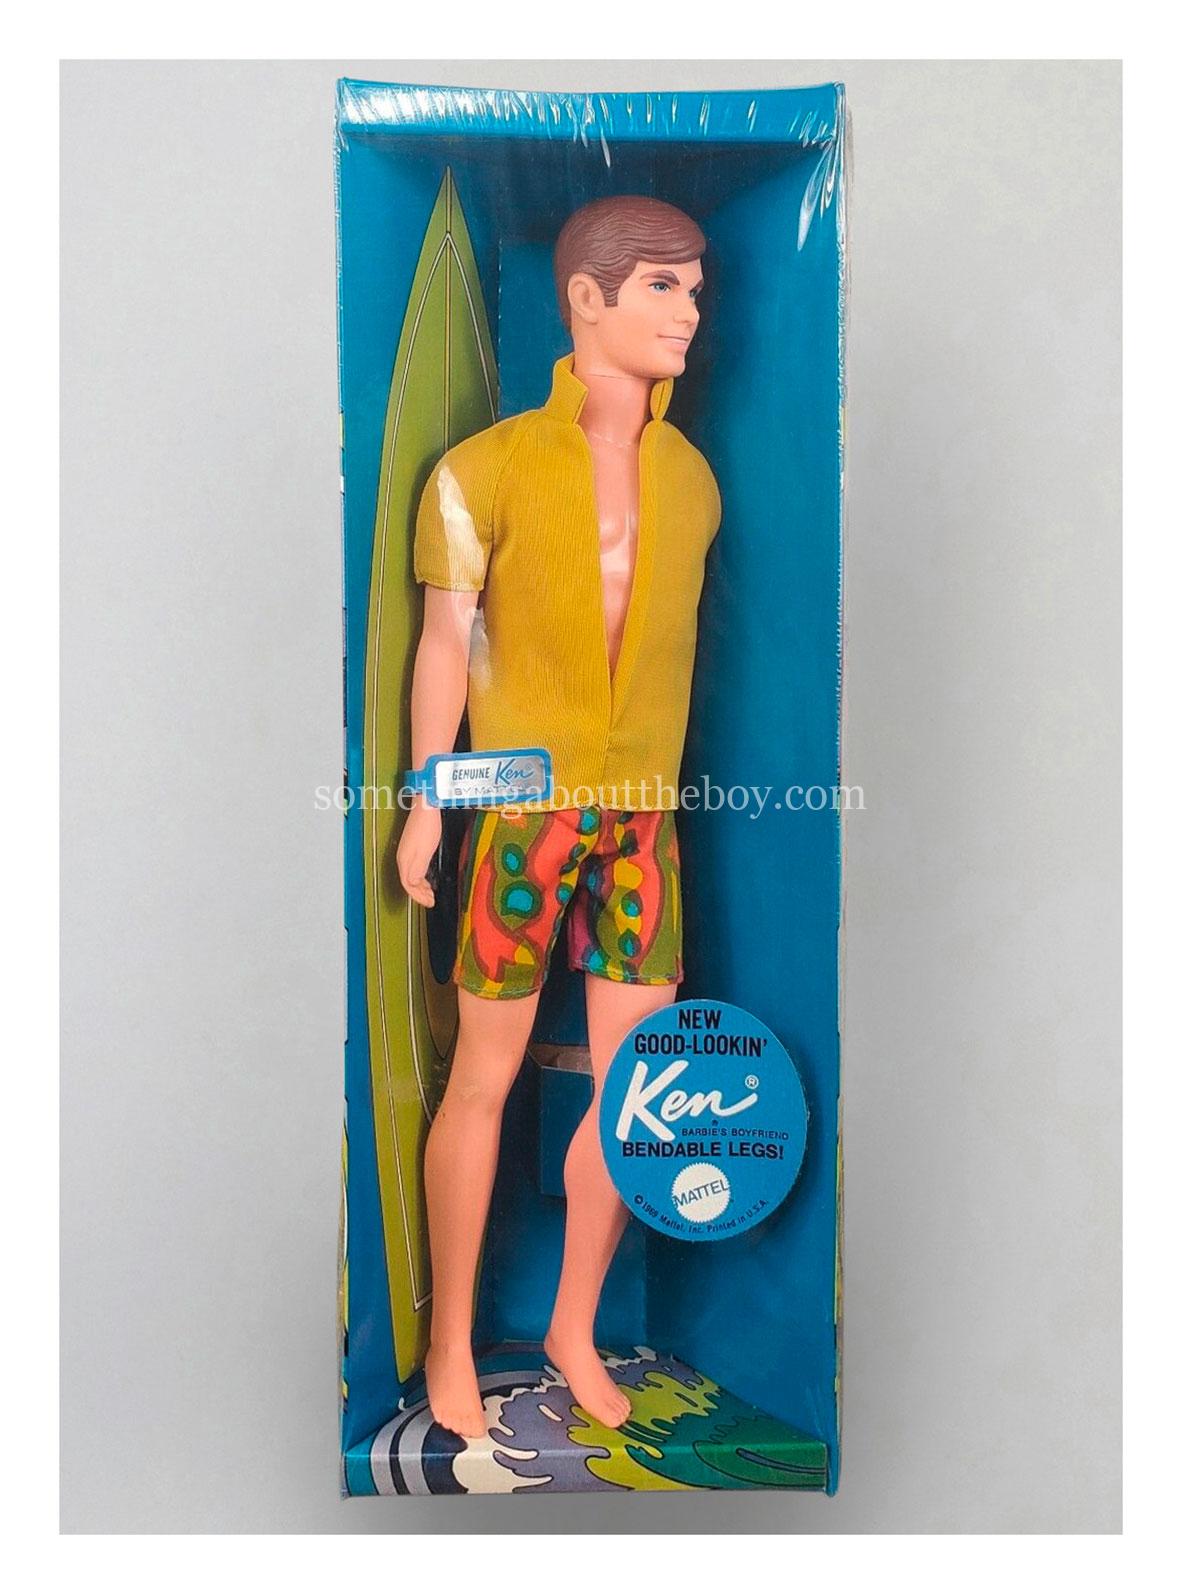 1970 #1124 New Good-Lookin' Ken in original packaging